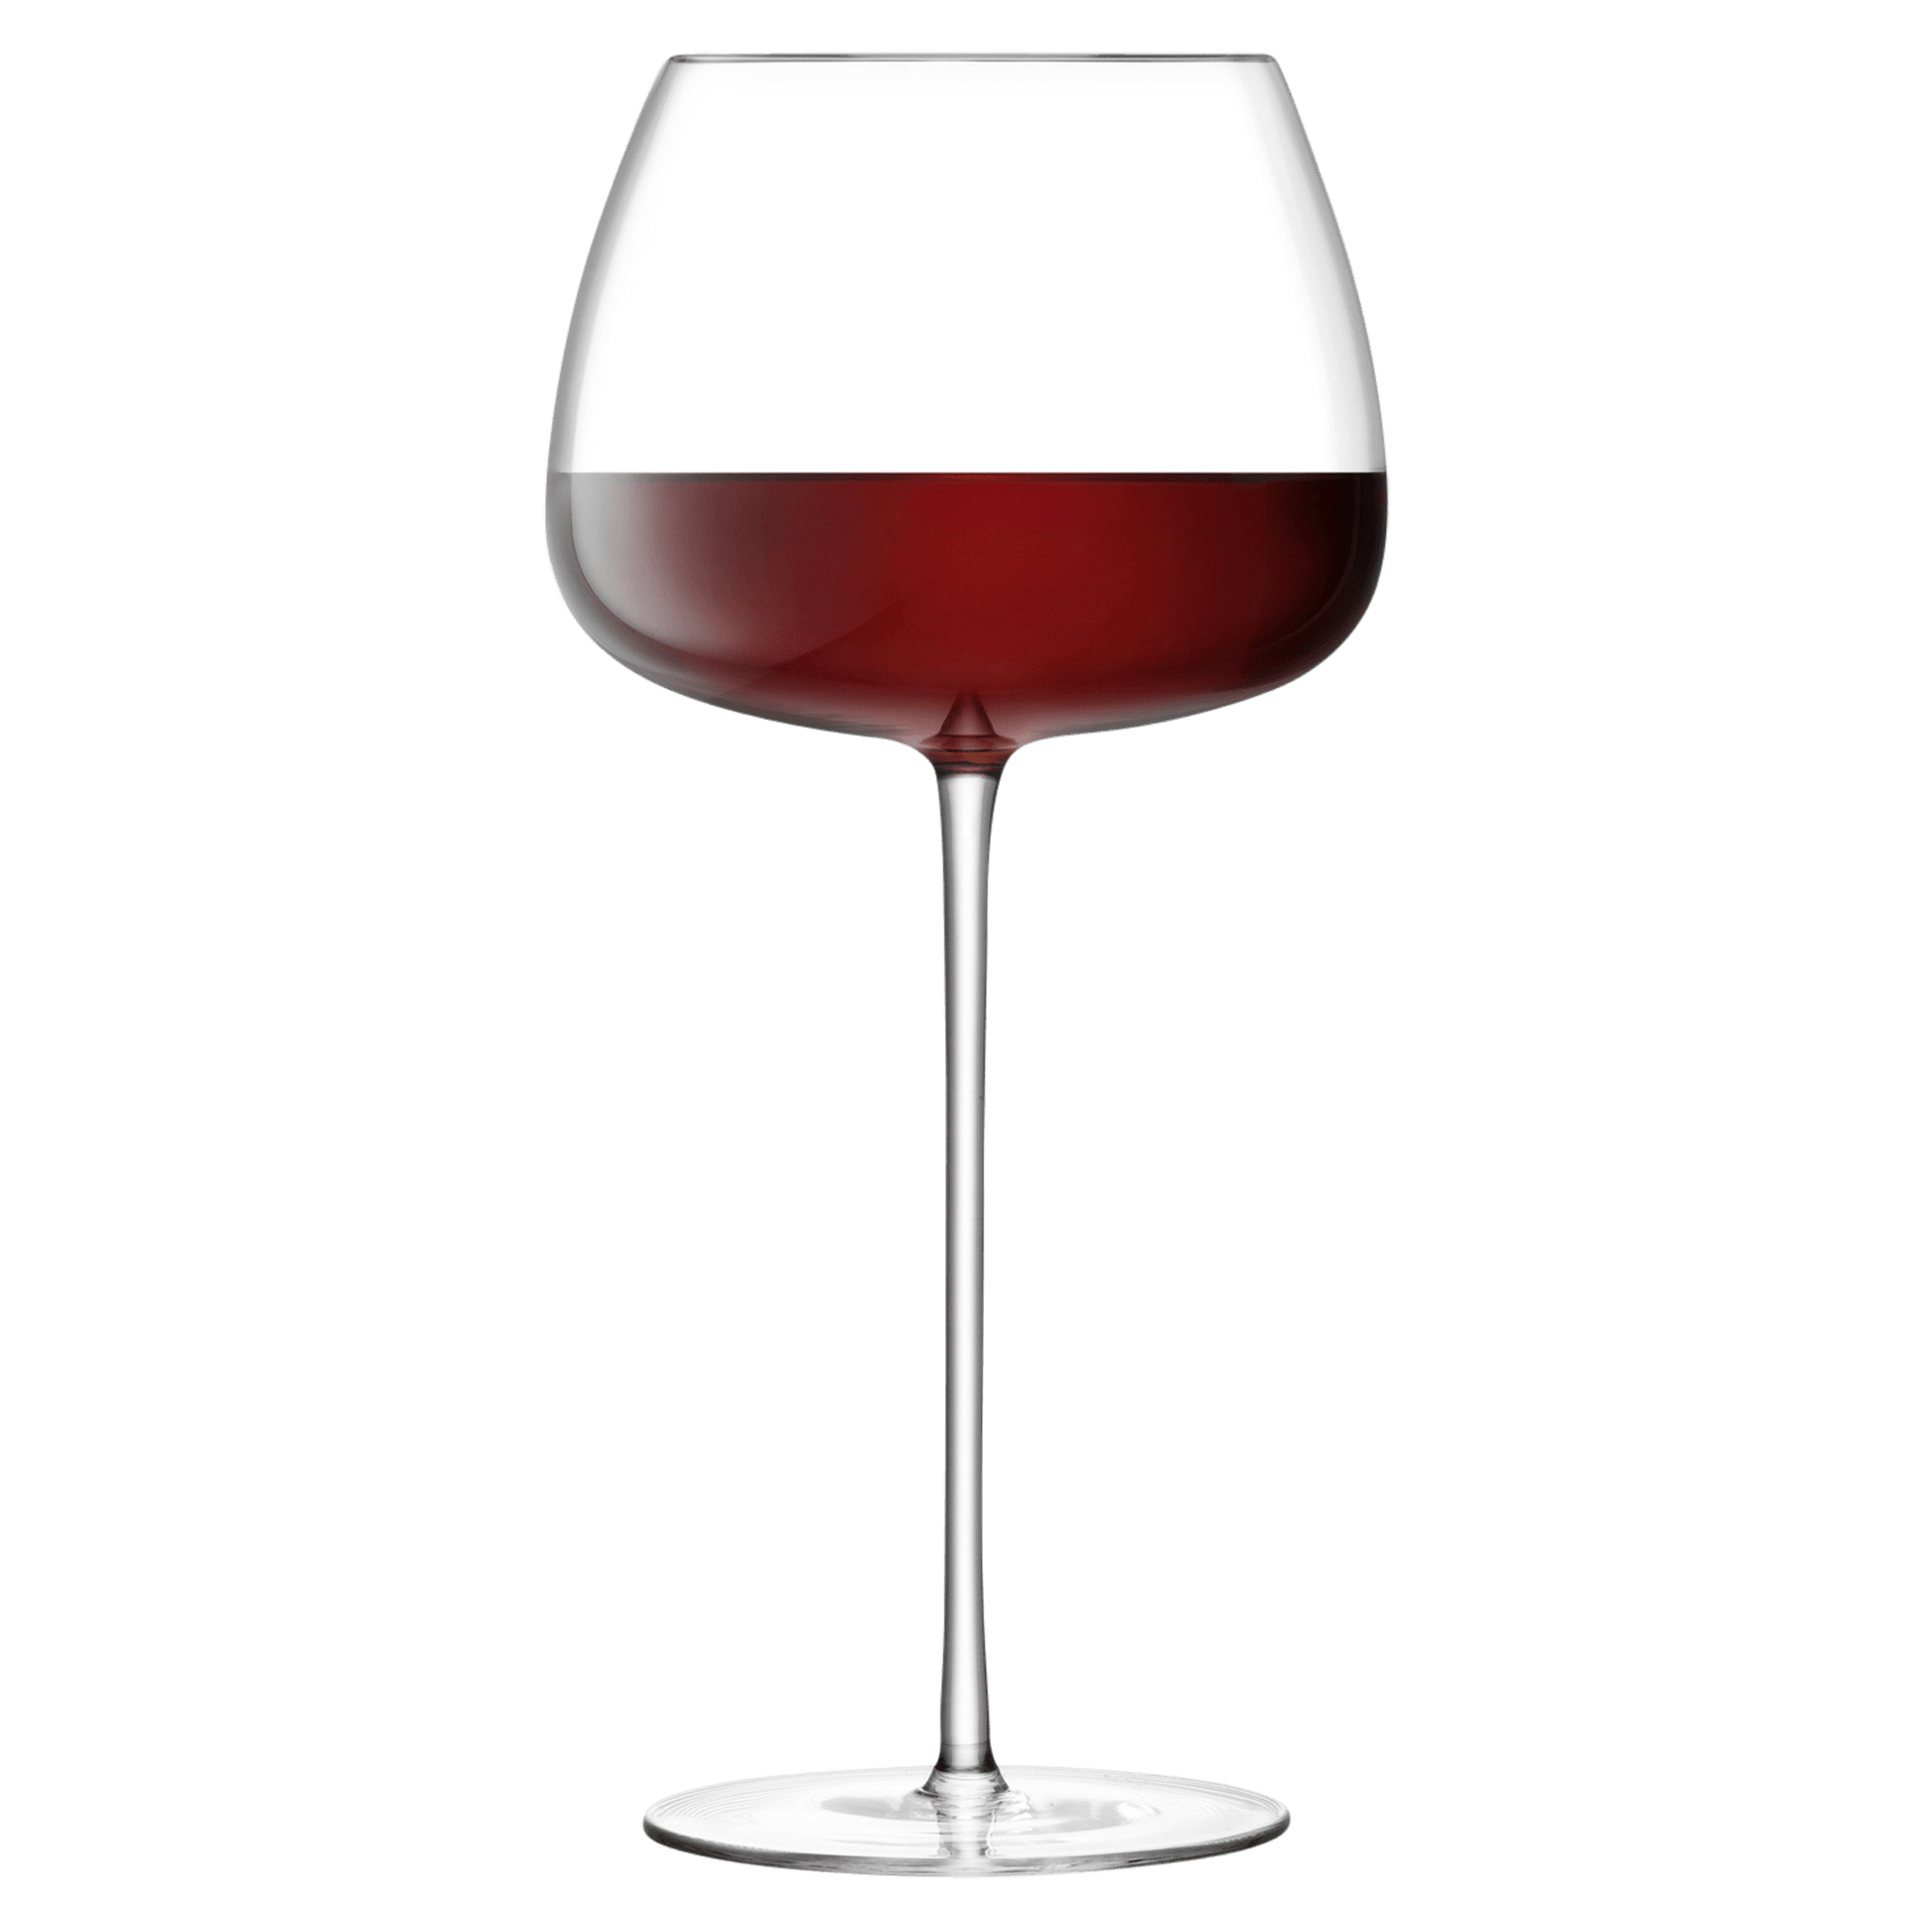 KOSIUN, Red Wine Glass, Large Balloon Bowl, Lead-Free